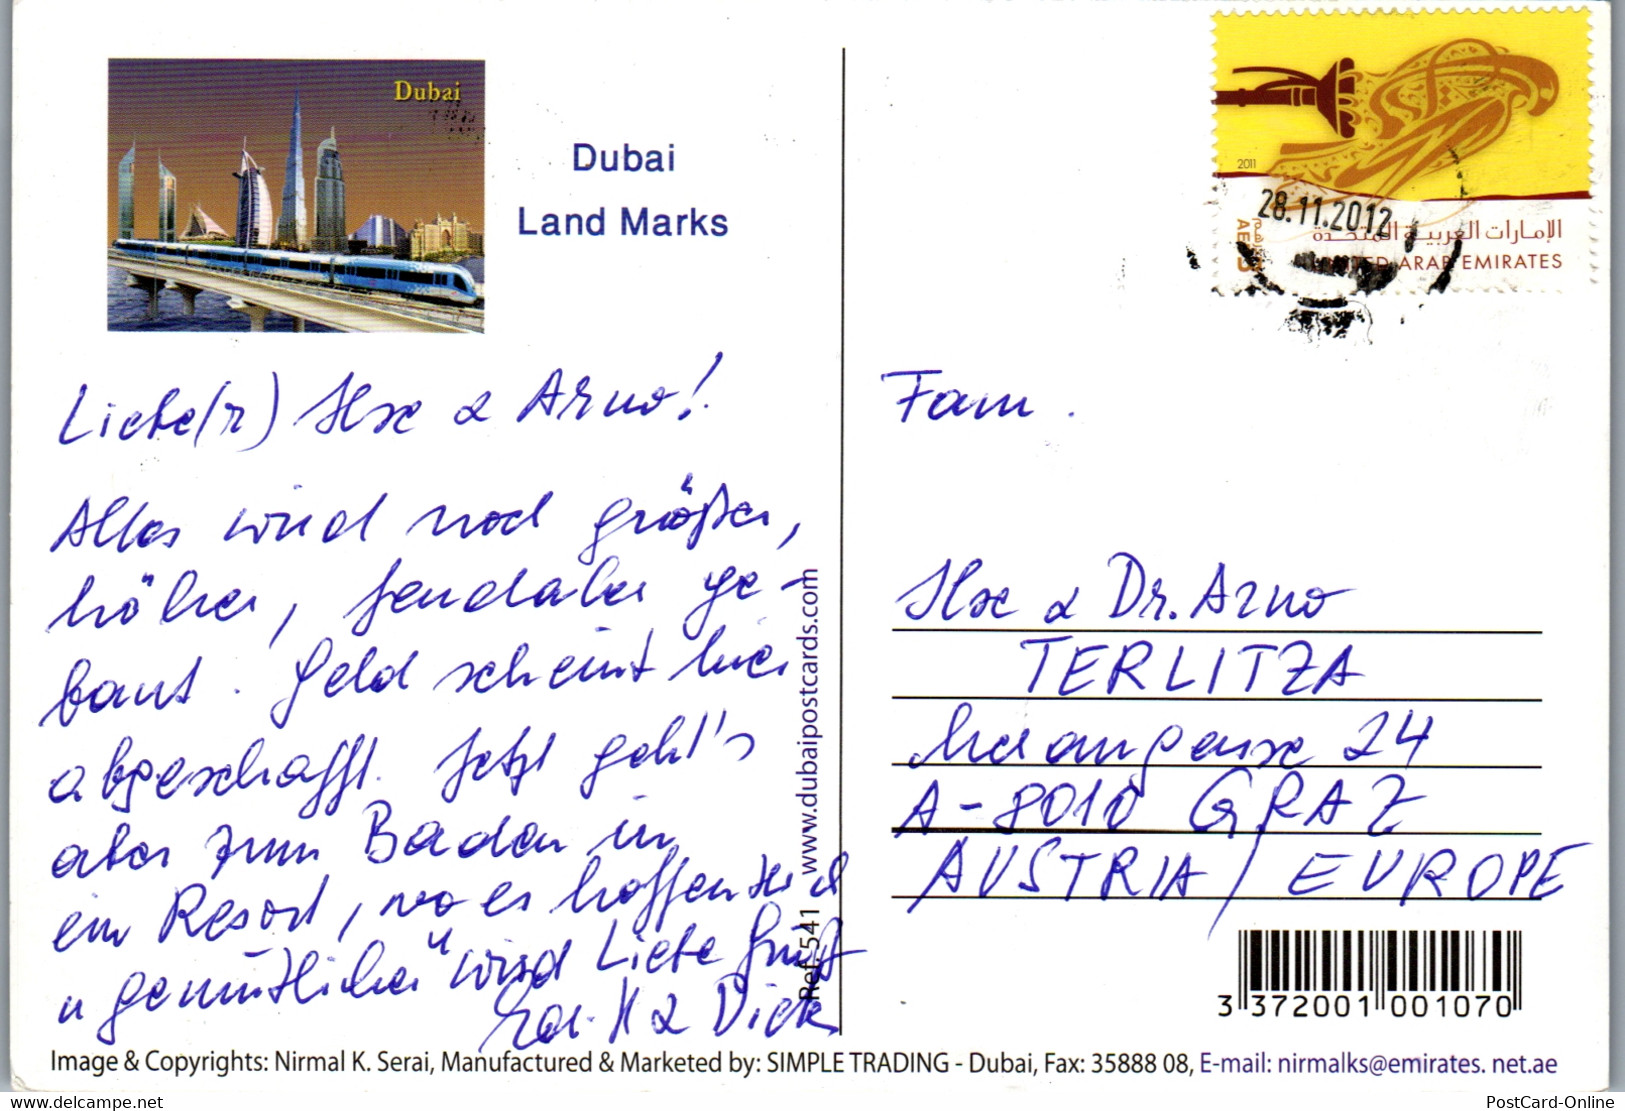 23289 - Vereinigte Arabische Emirate - Dubai - Gelaufen 2012 - Dubai